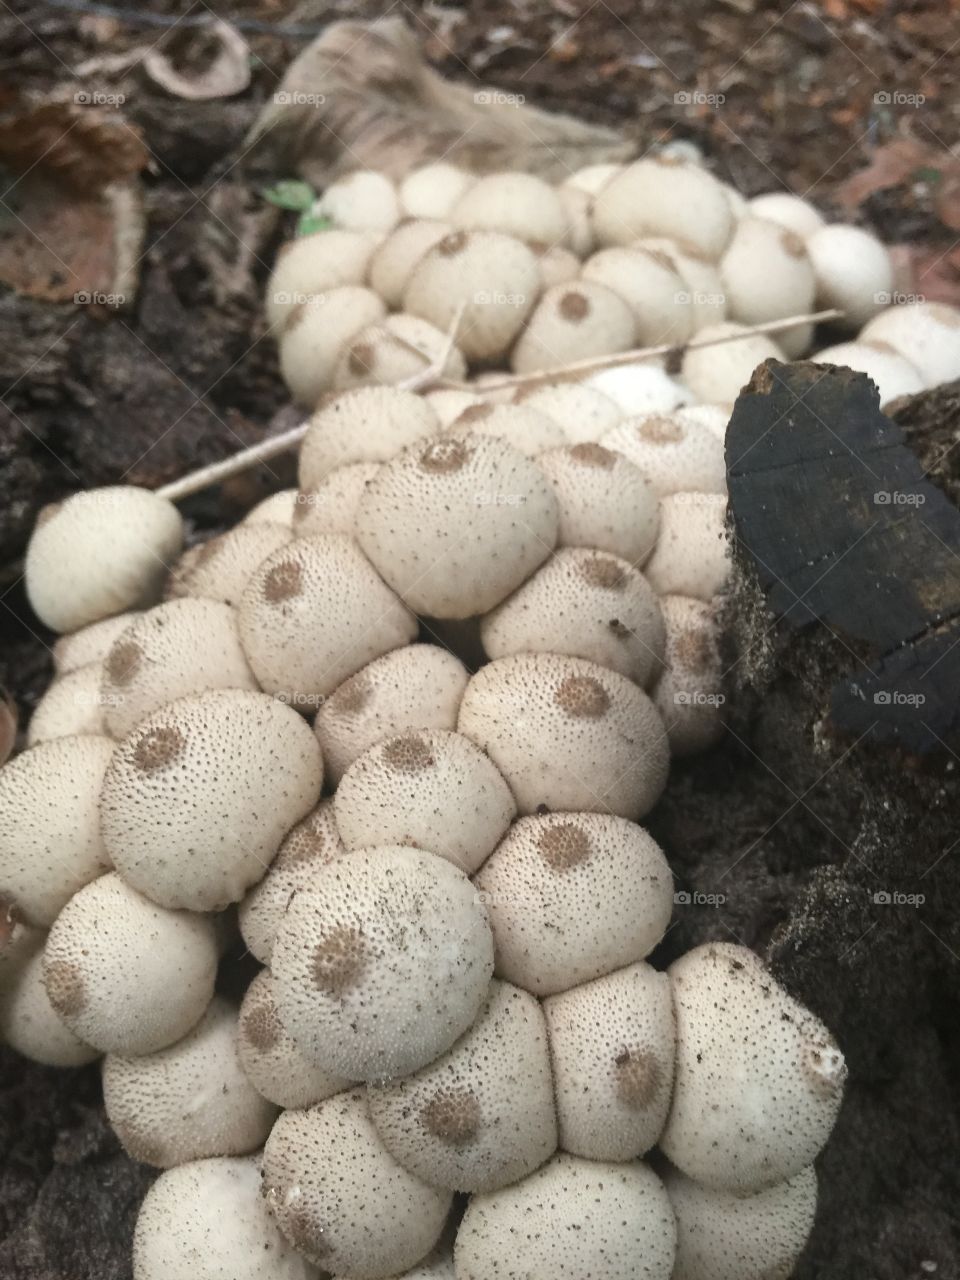 Mushrooms that look like boobs